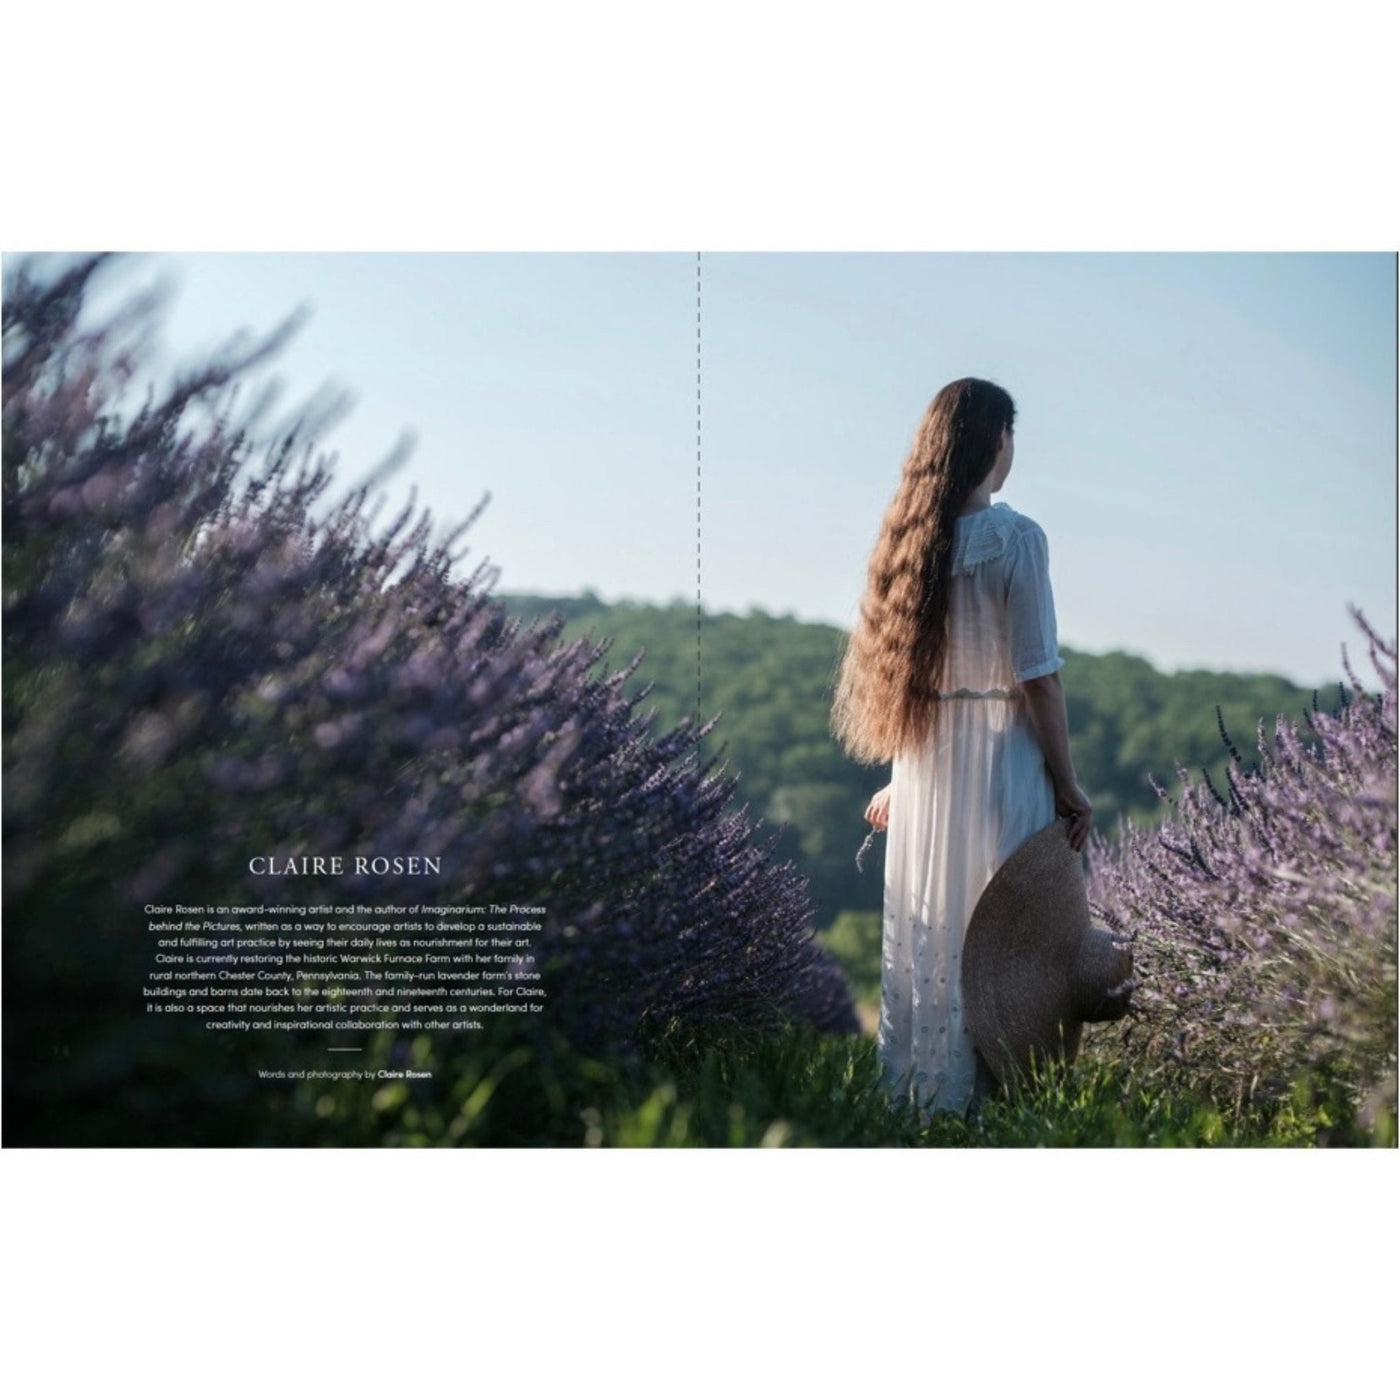 Spread in Faire Magazine Issue 6 showing Claire Rosen artist in flower field..